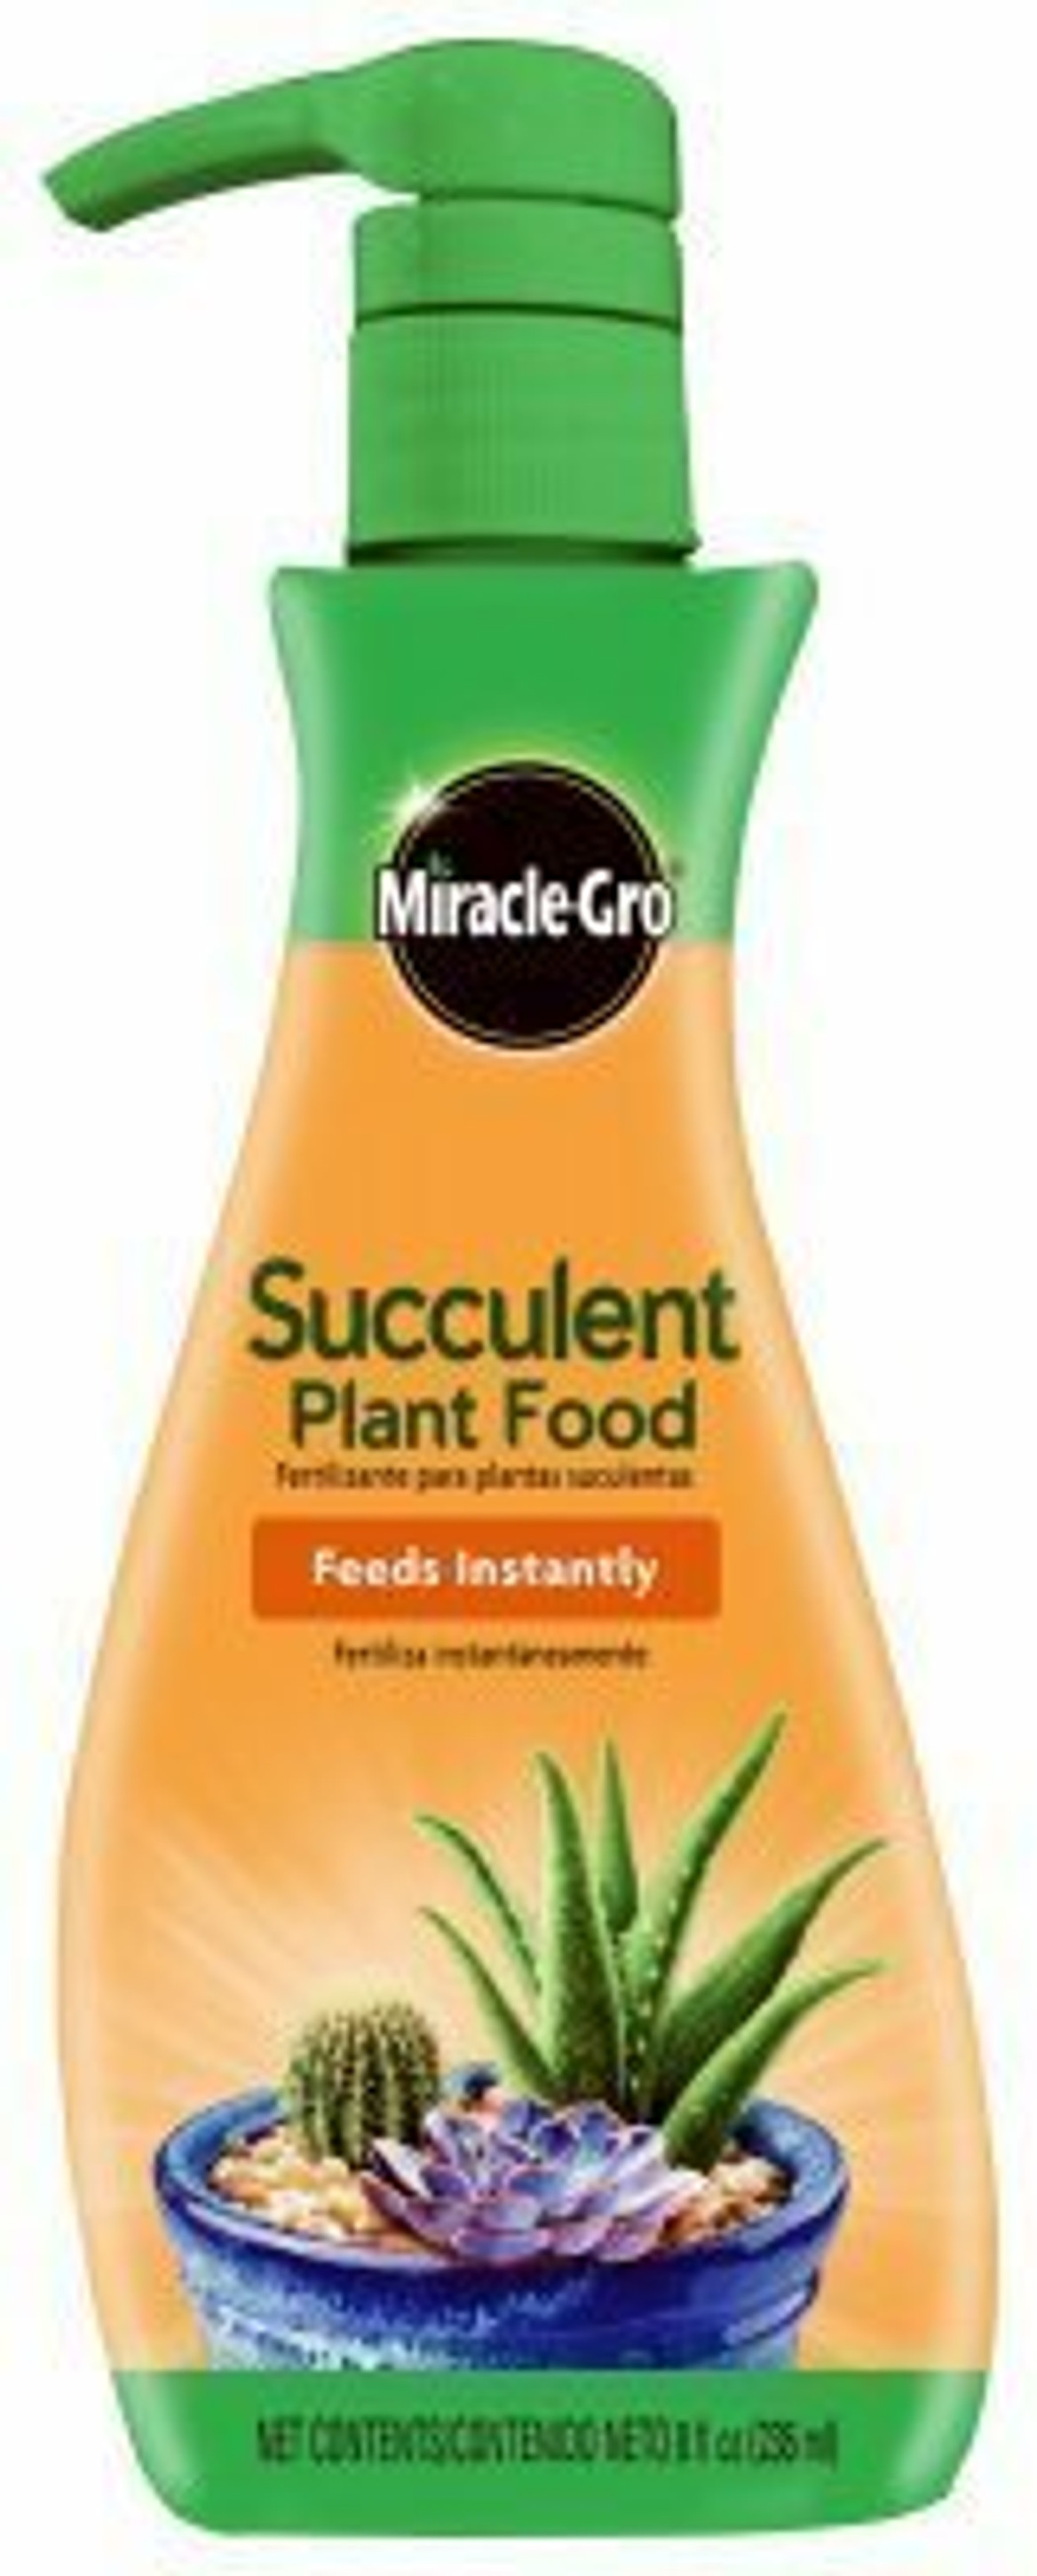 SCOTTS MIRACLE GRO - Foaming Succulent Plant Food, 8-oz.